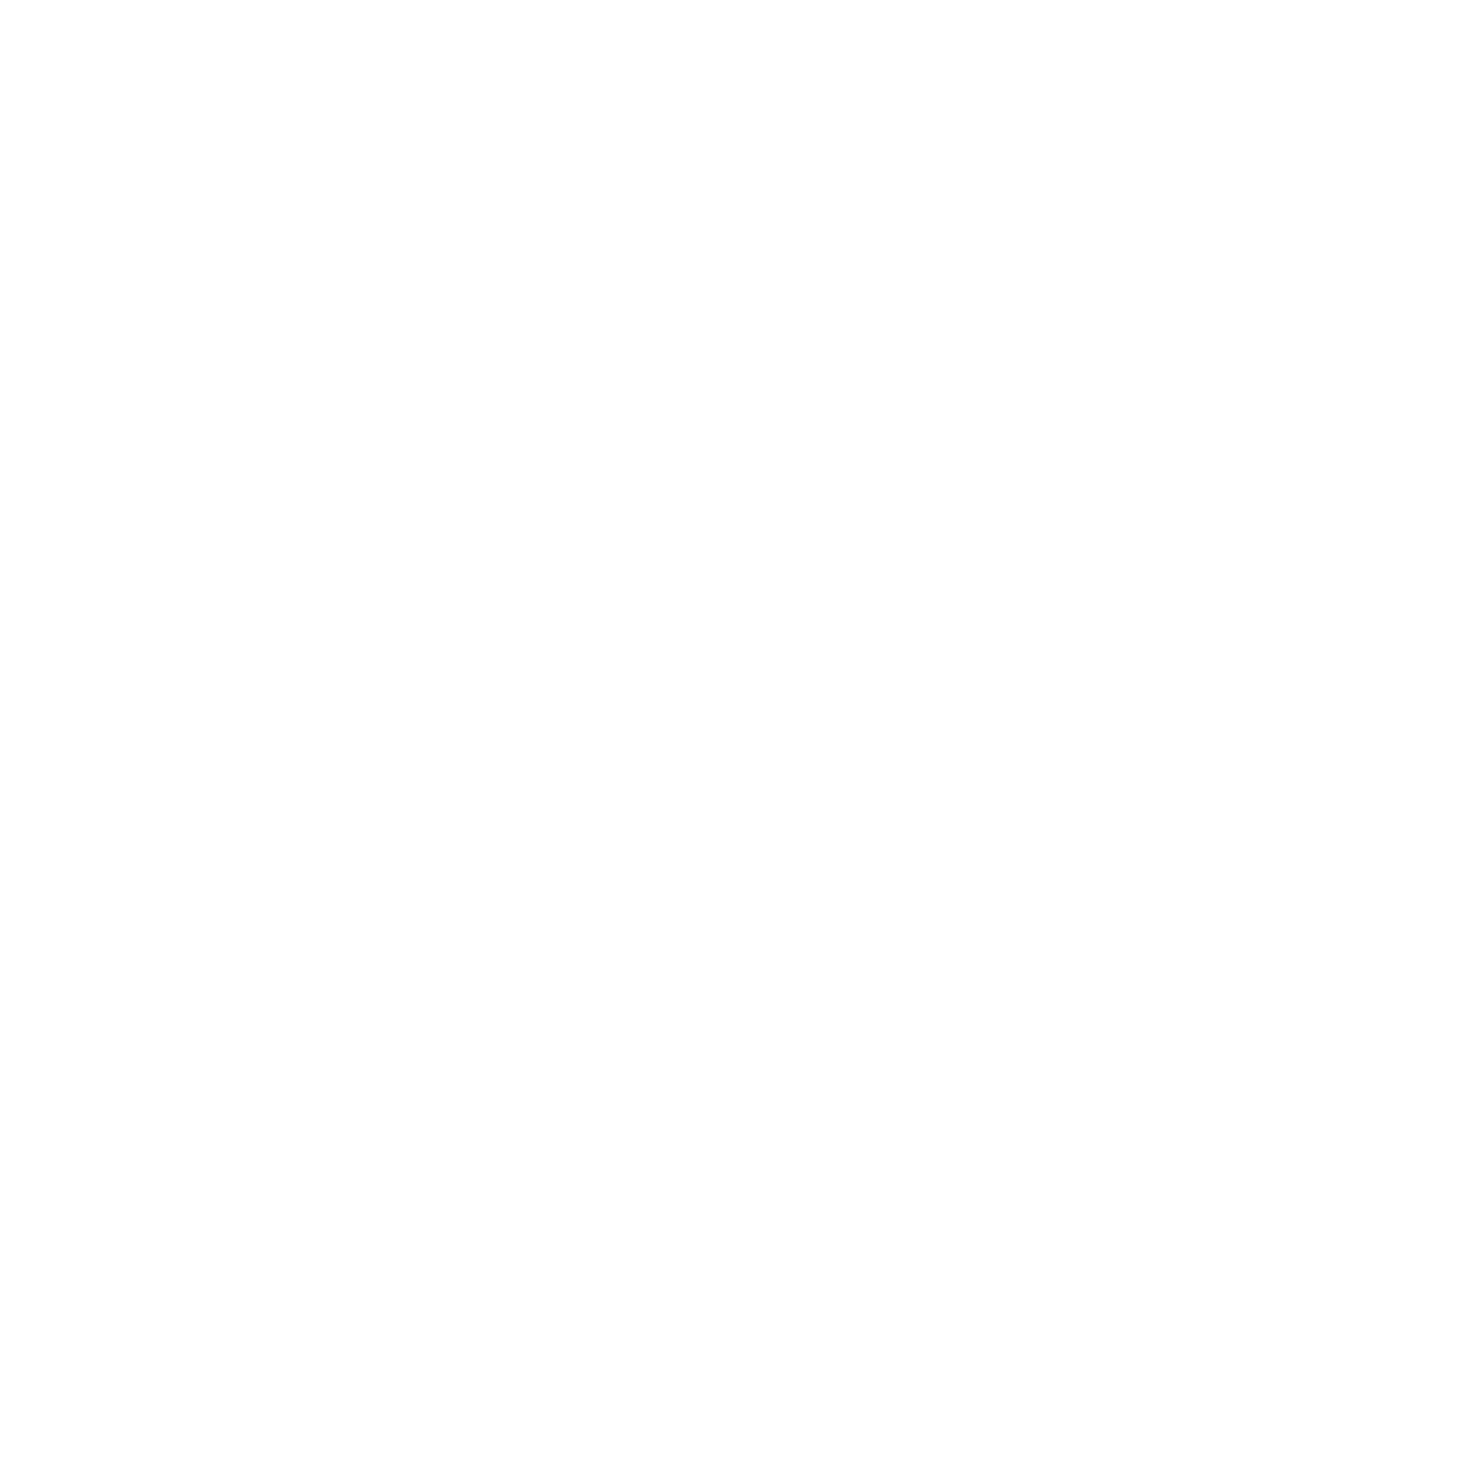 Overall Health